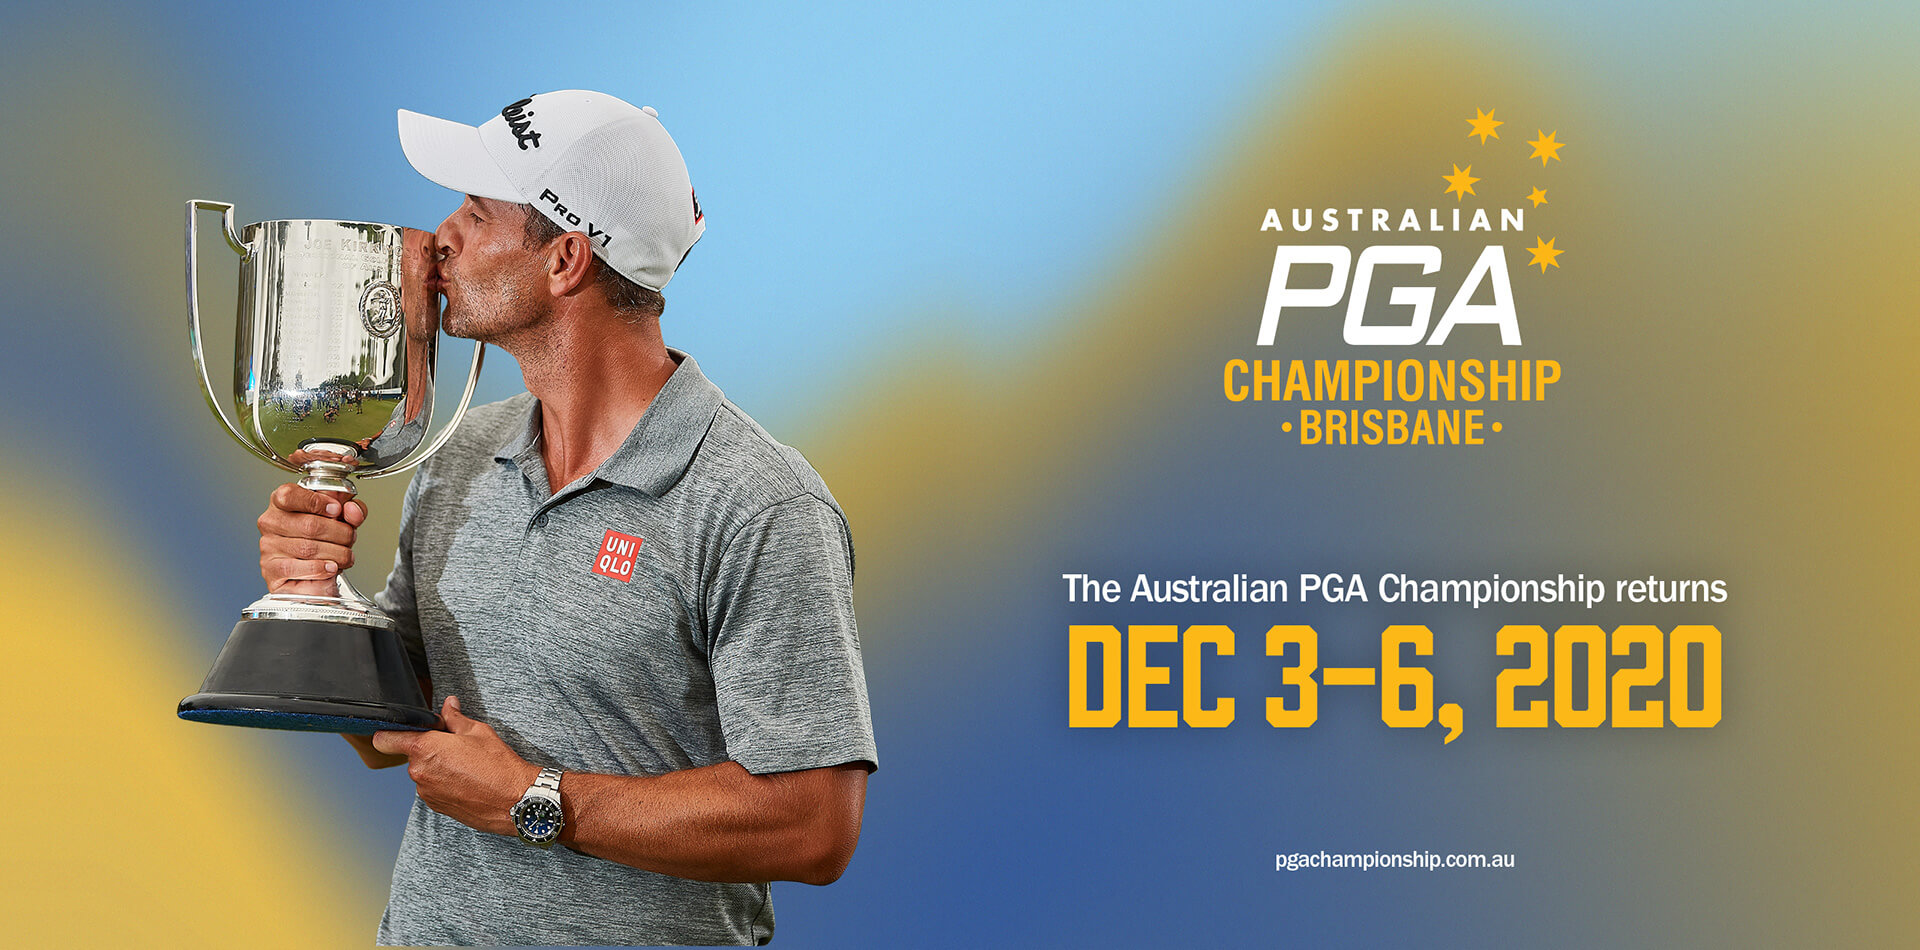 Australian PGA Championship 2020 3 6 December Official tournament